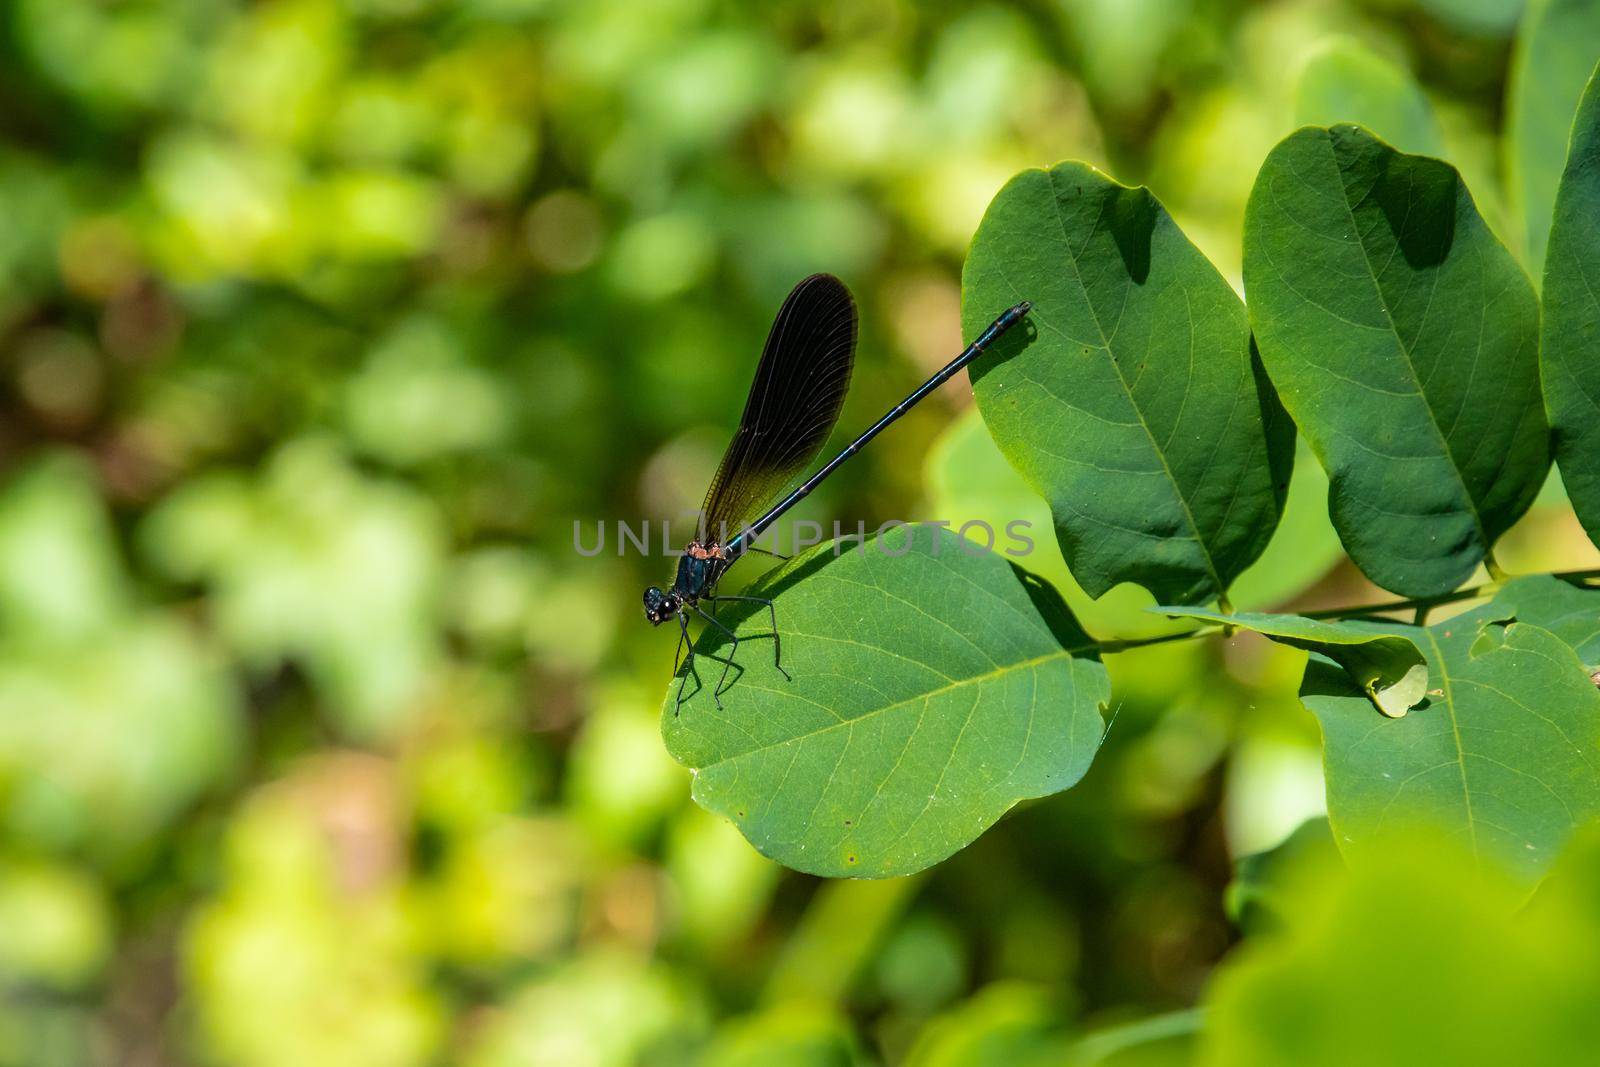 Dragonfly standing on a leaf, Nebrodi Park, Sicily